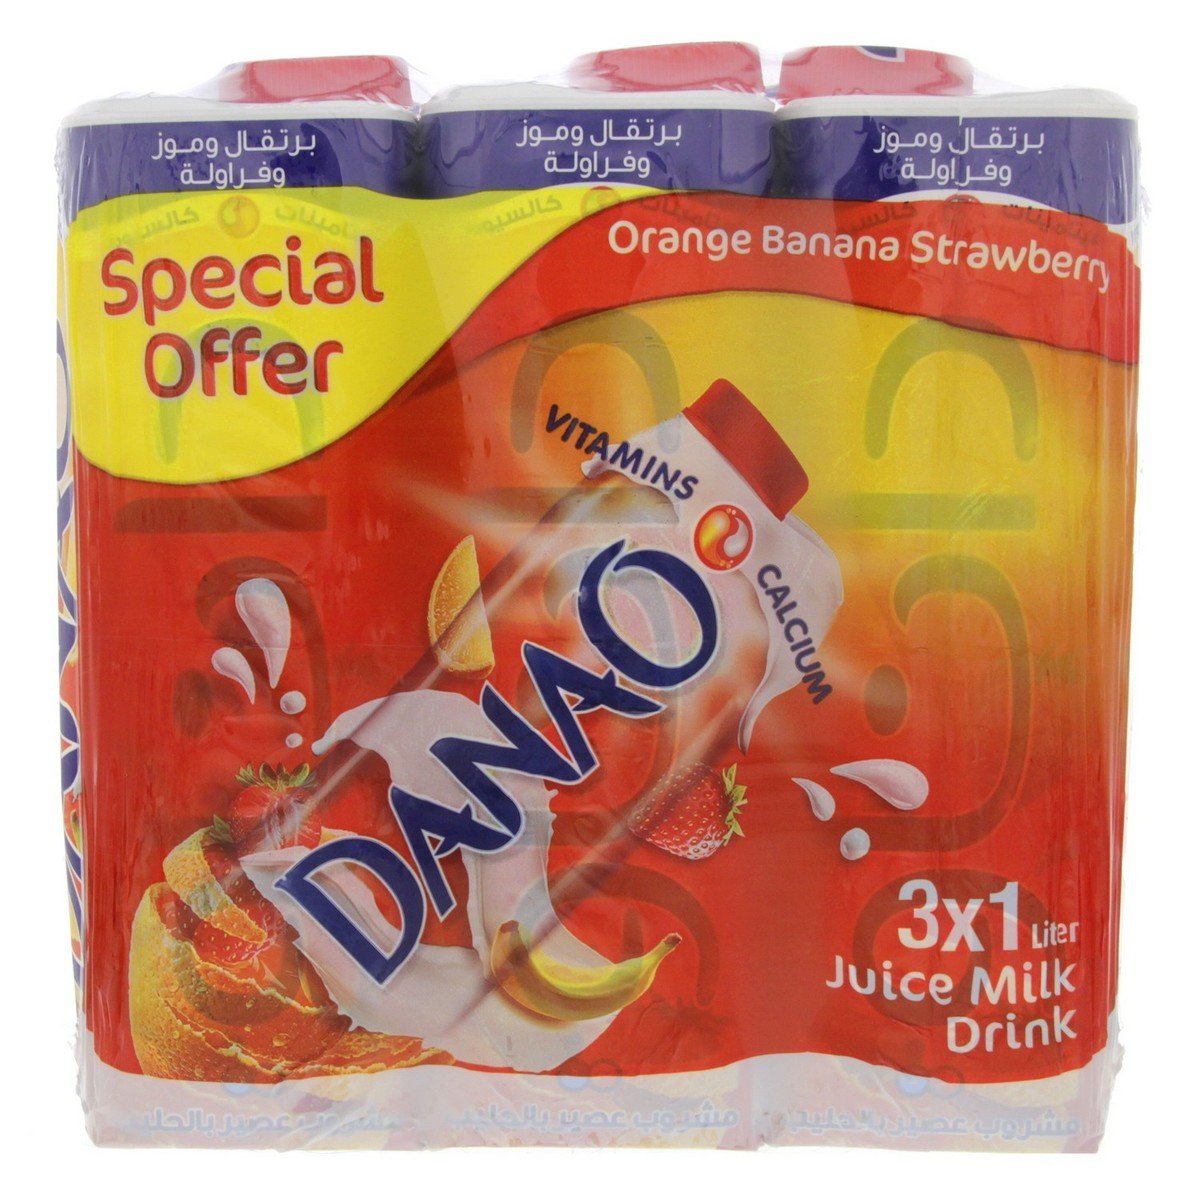 Danao Orange Banana Strawberry Juice Milk Drink 3 x 1 Litre